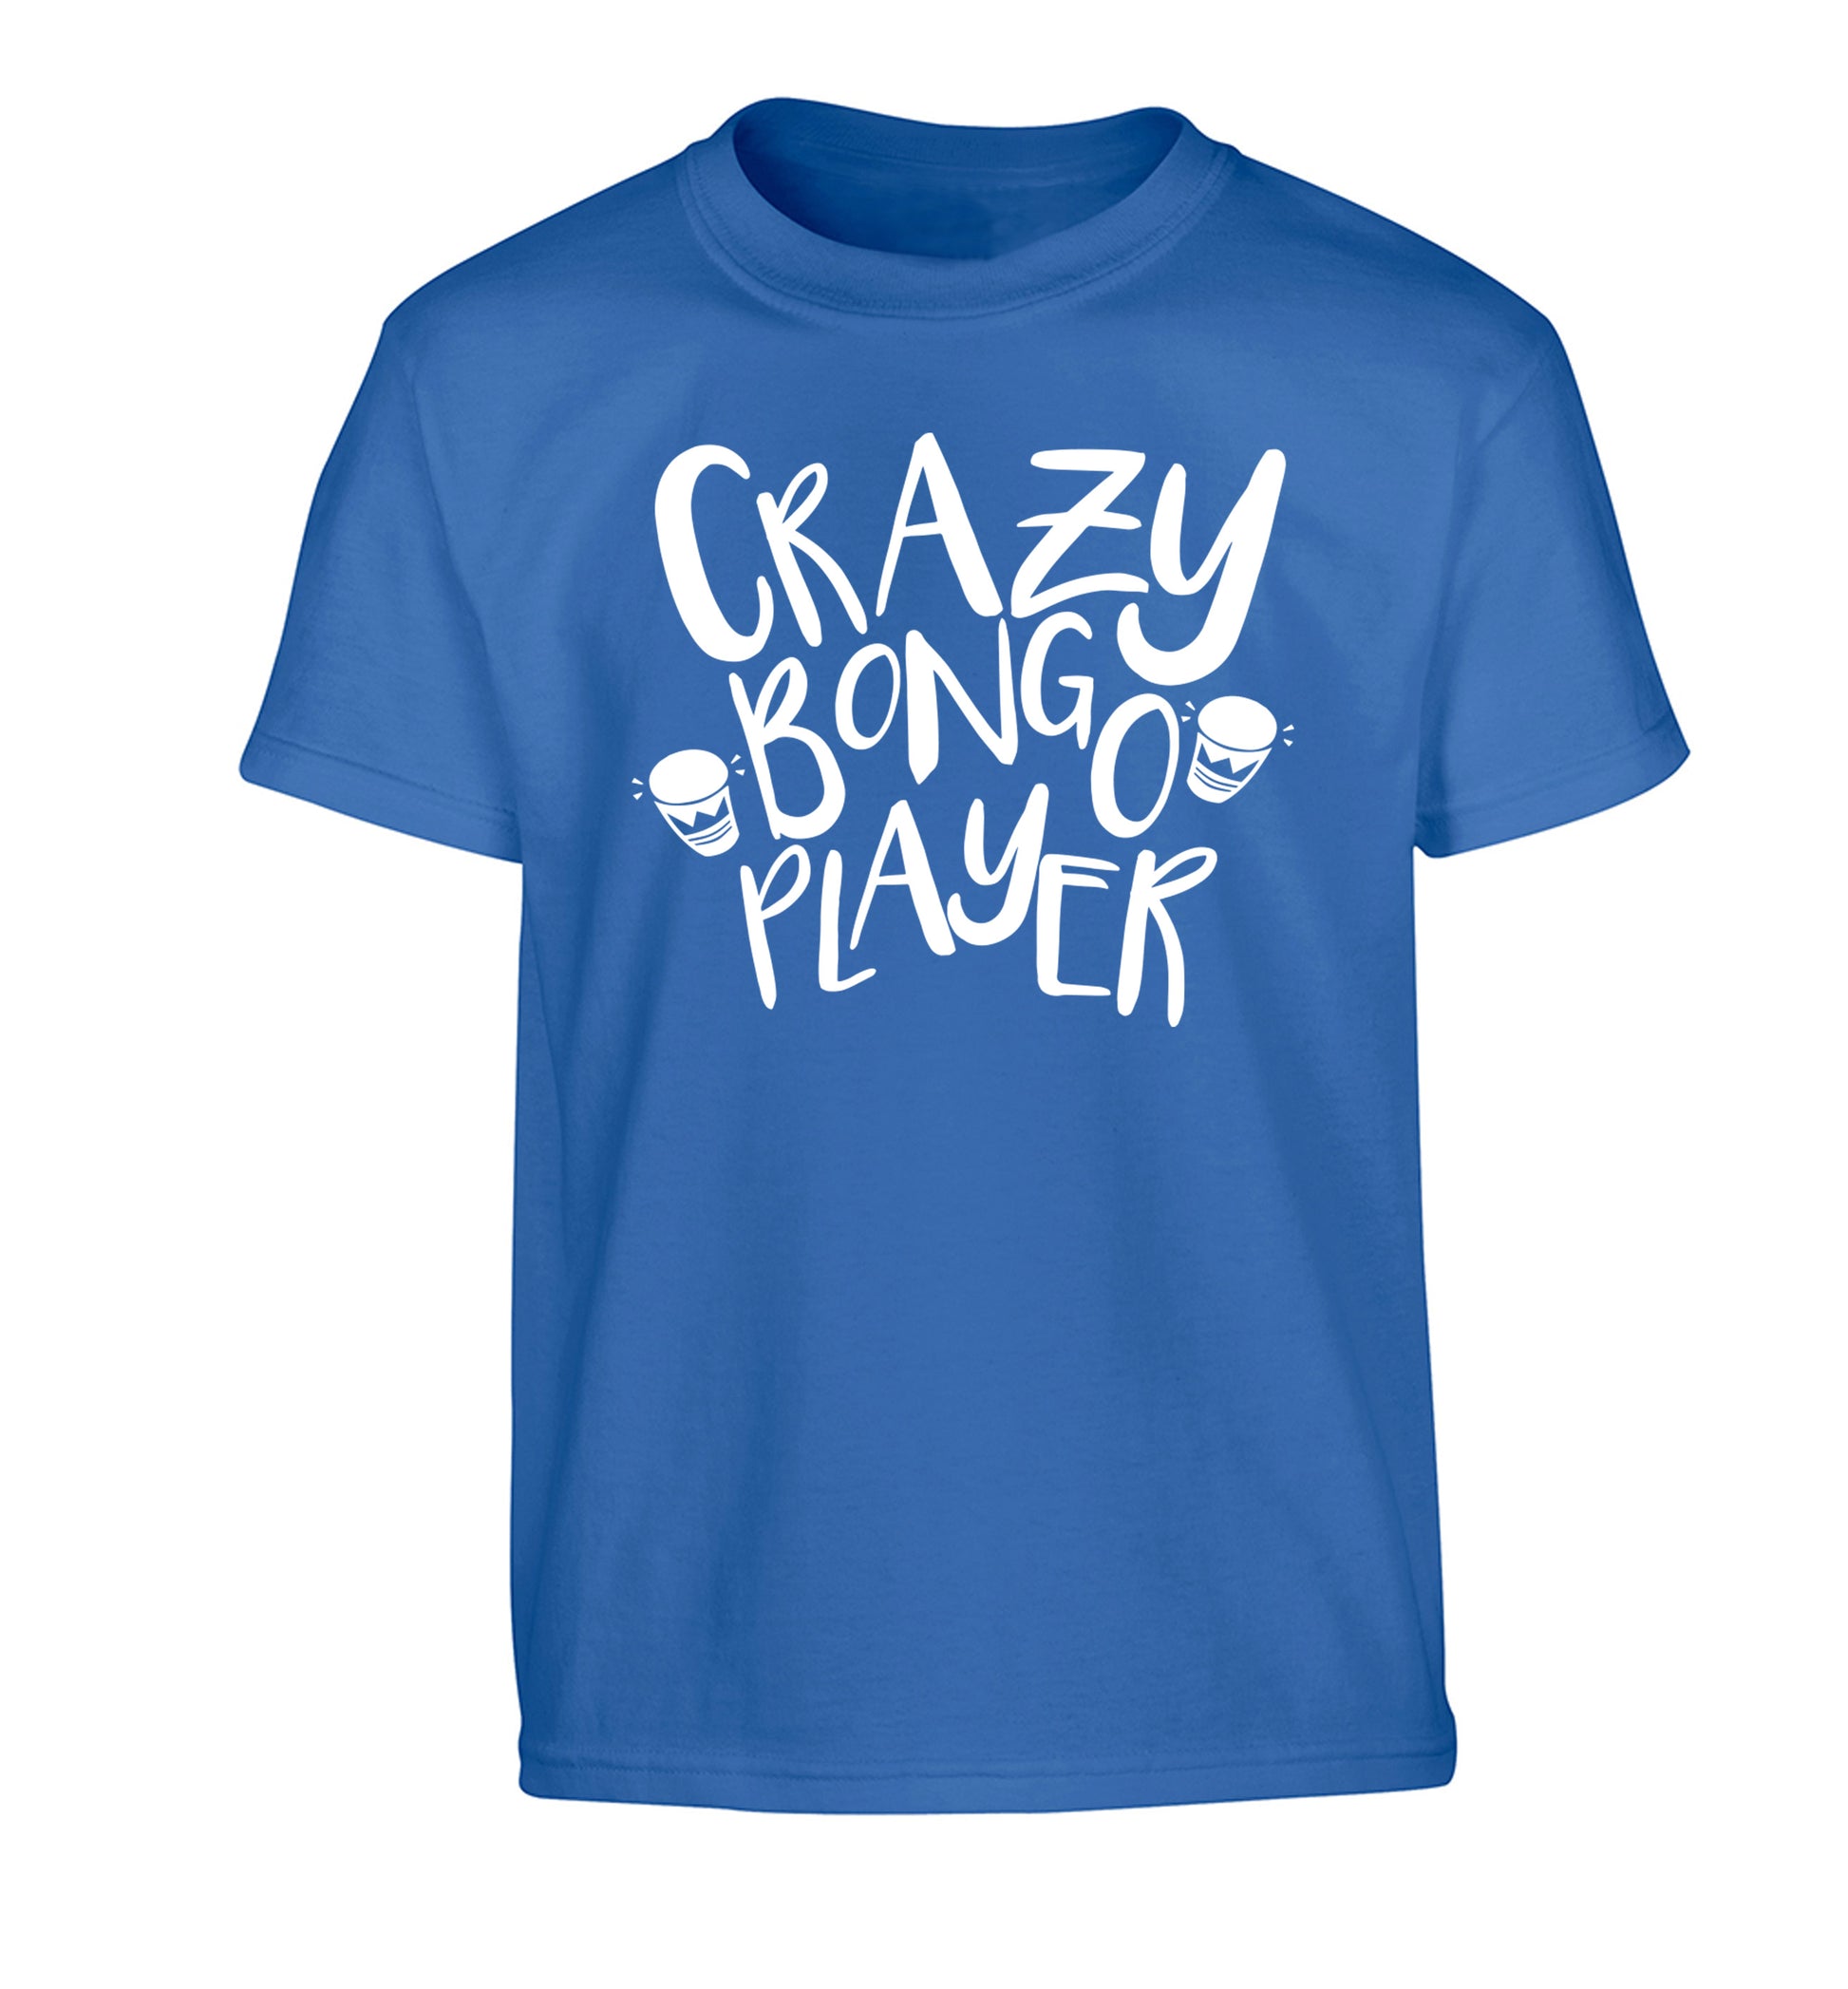 Crazy bongo player Children's blue Tshirt 12-14 Years